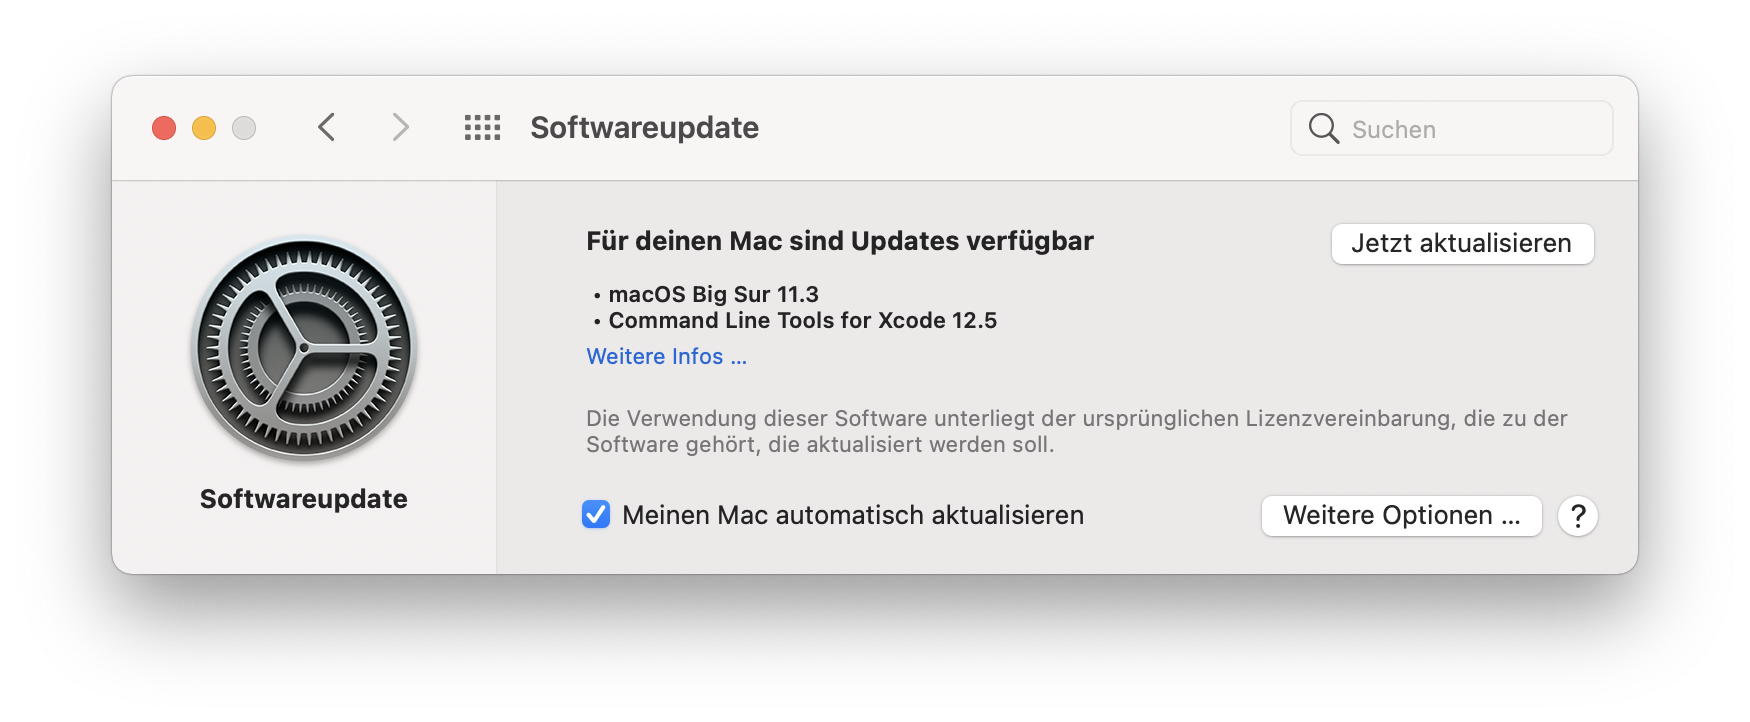 macos big sur update stuck at 10 minutes